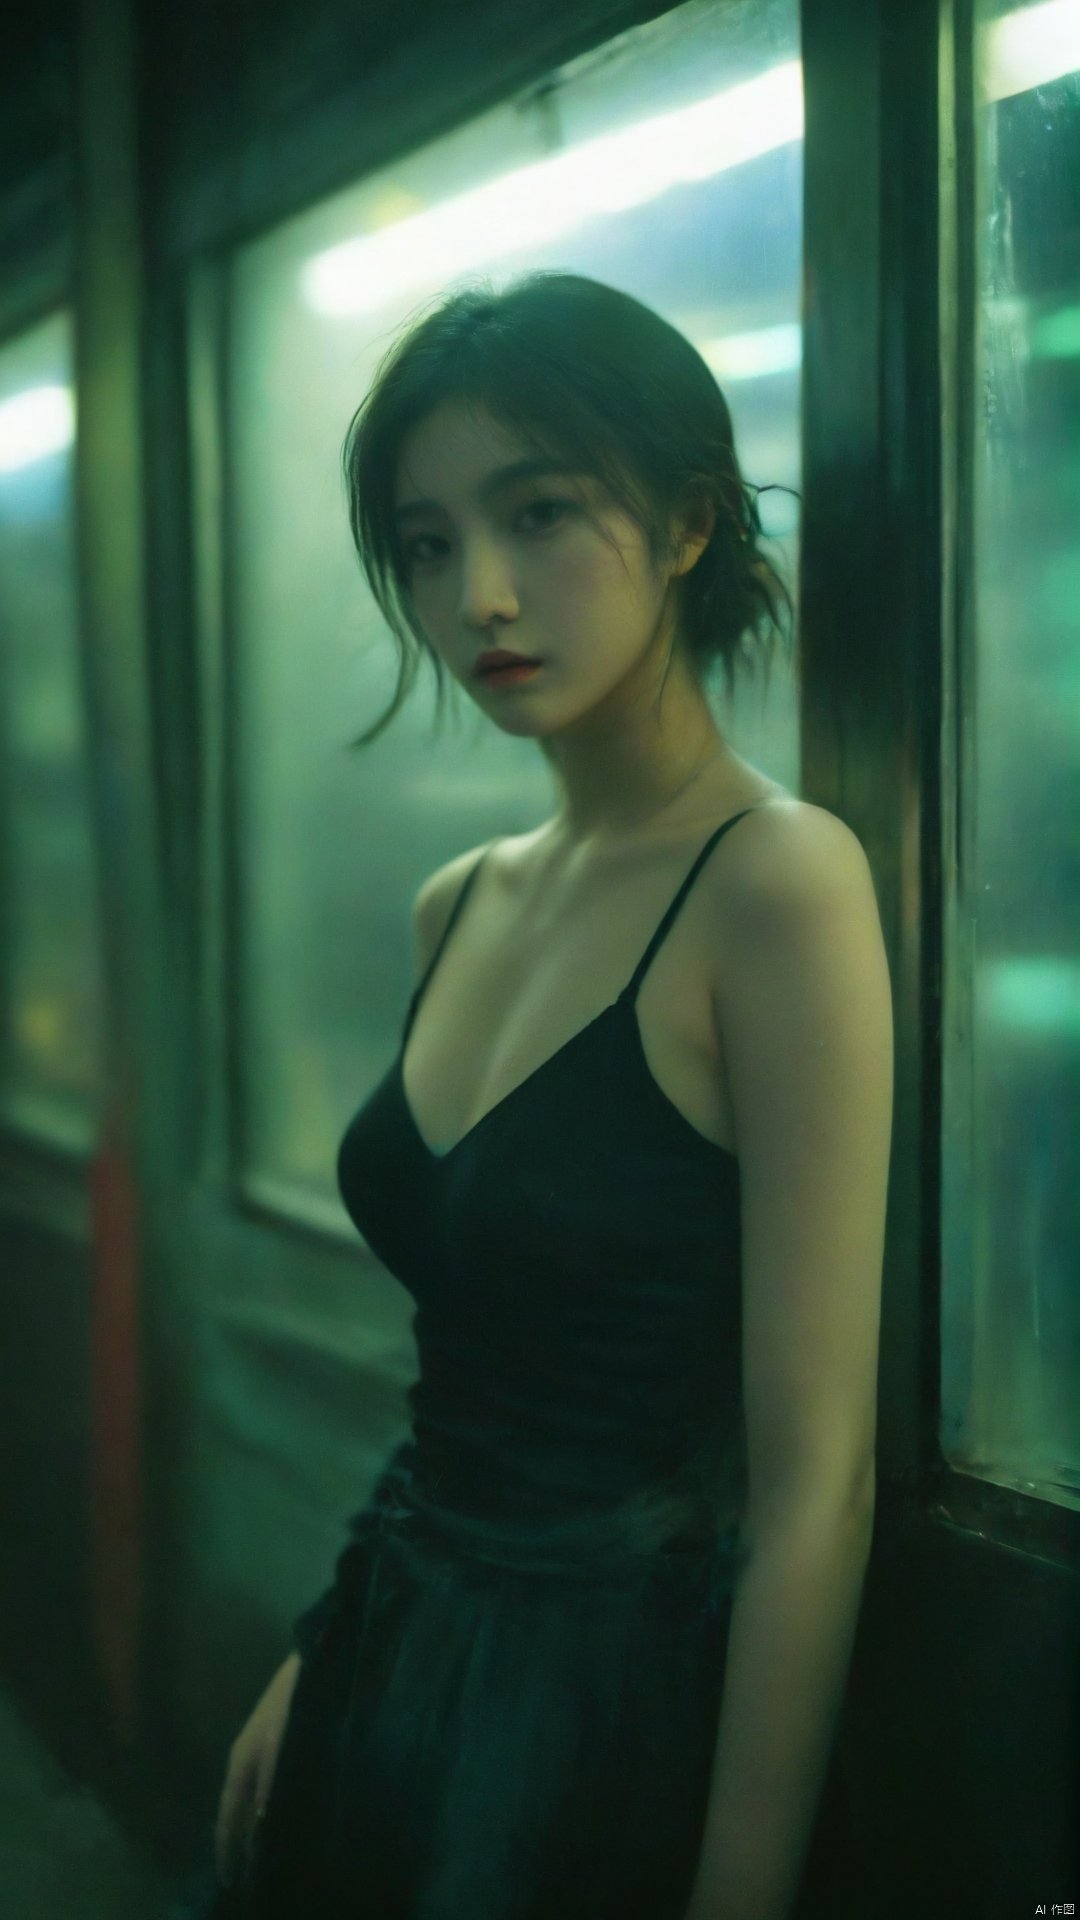  1girl,film grain, Fujifilm XT3, night shot, 1girl, (big breasts:1.56)
,BREAK,
Shanghai streets in the 1980s, neon lights at night, Wong Kar-wai movie lighting texture, sunlight